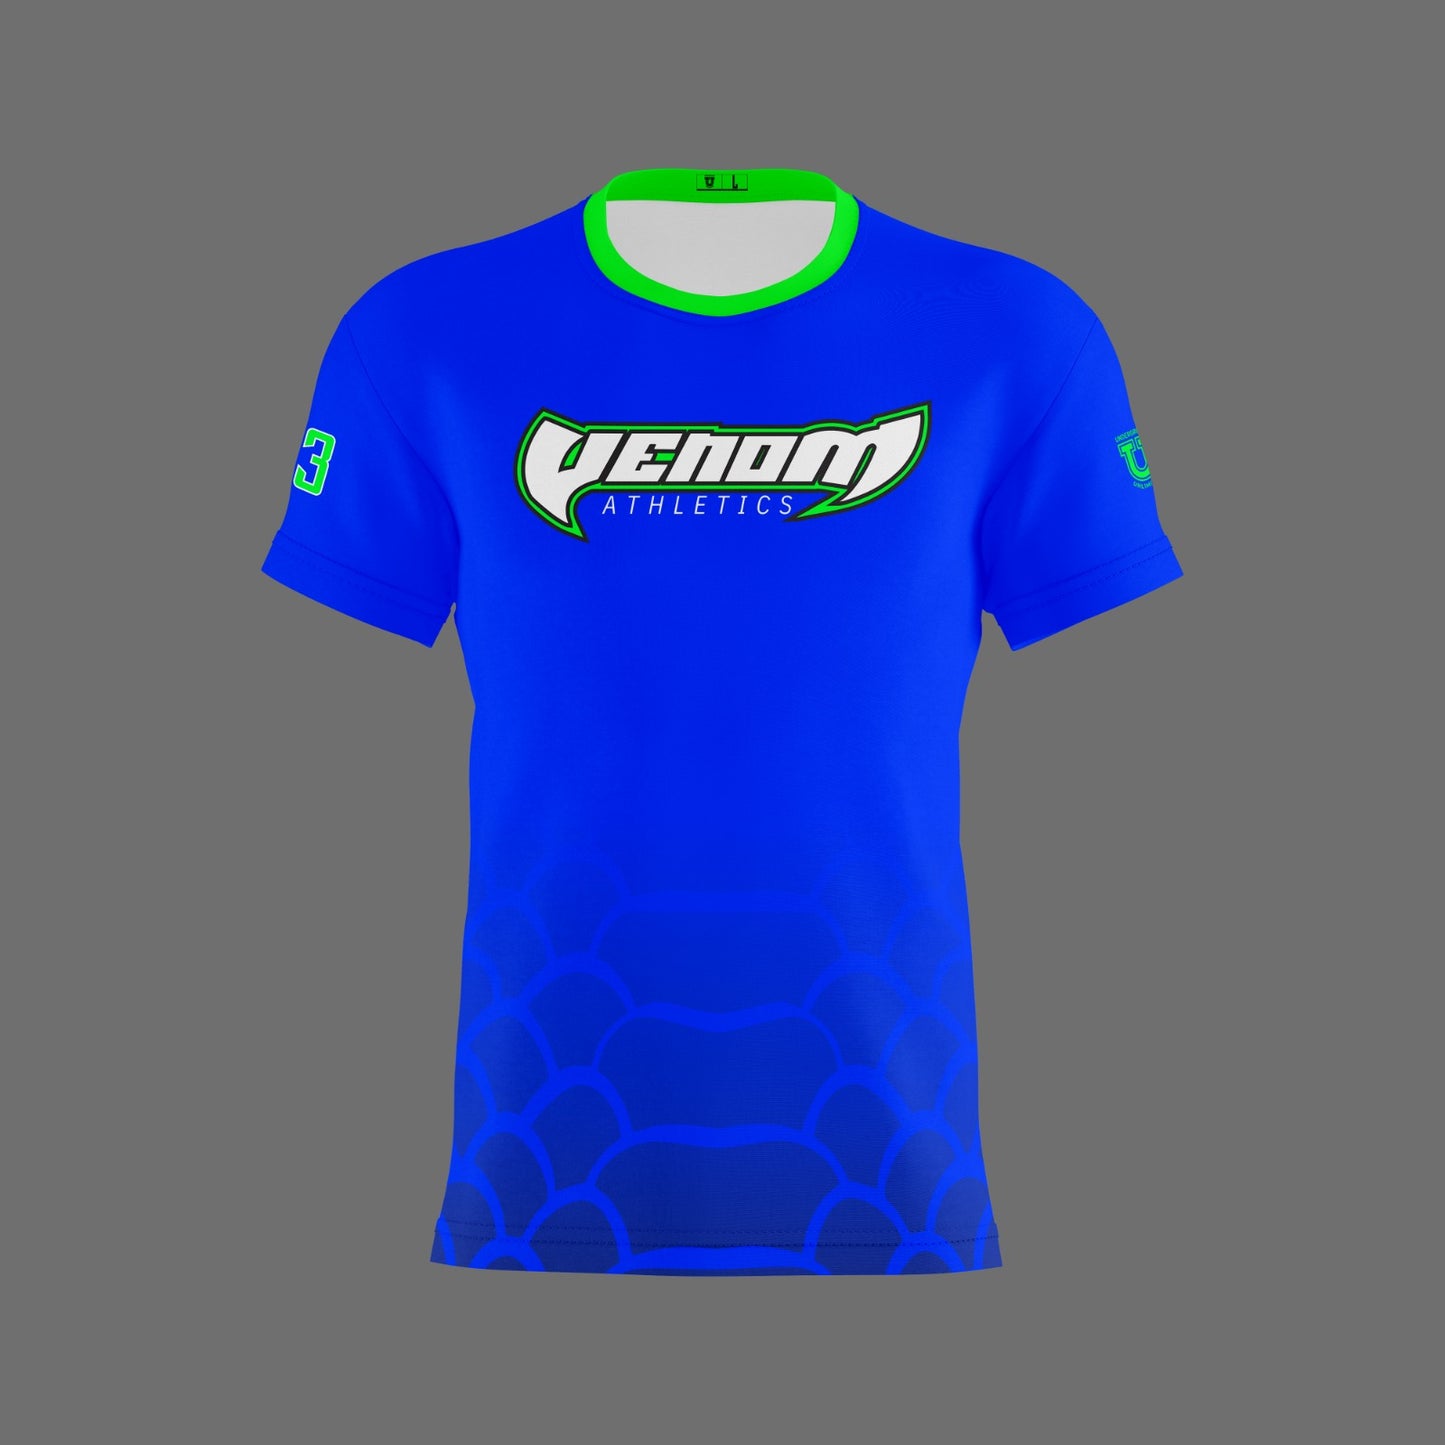 Venom Athletics Dri Tech T-Shirt ~ Blue Ghosted Base